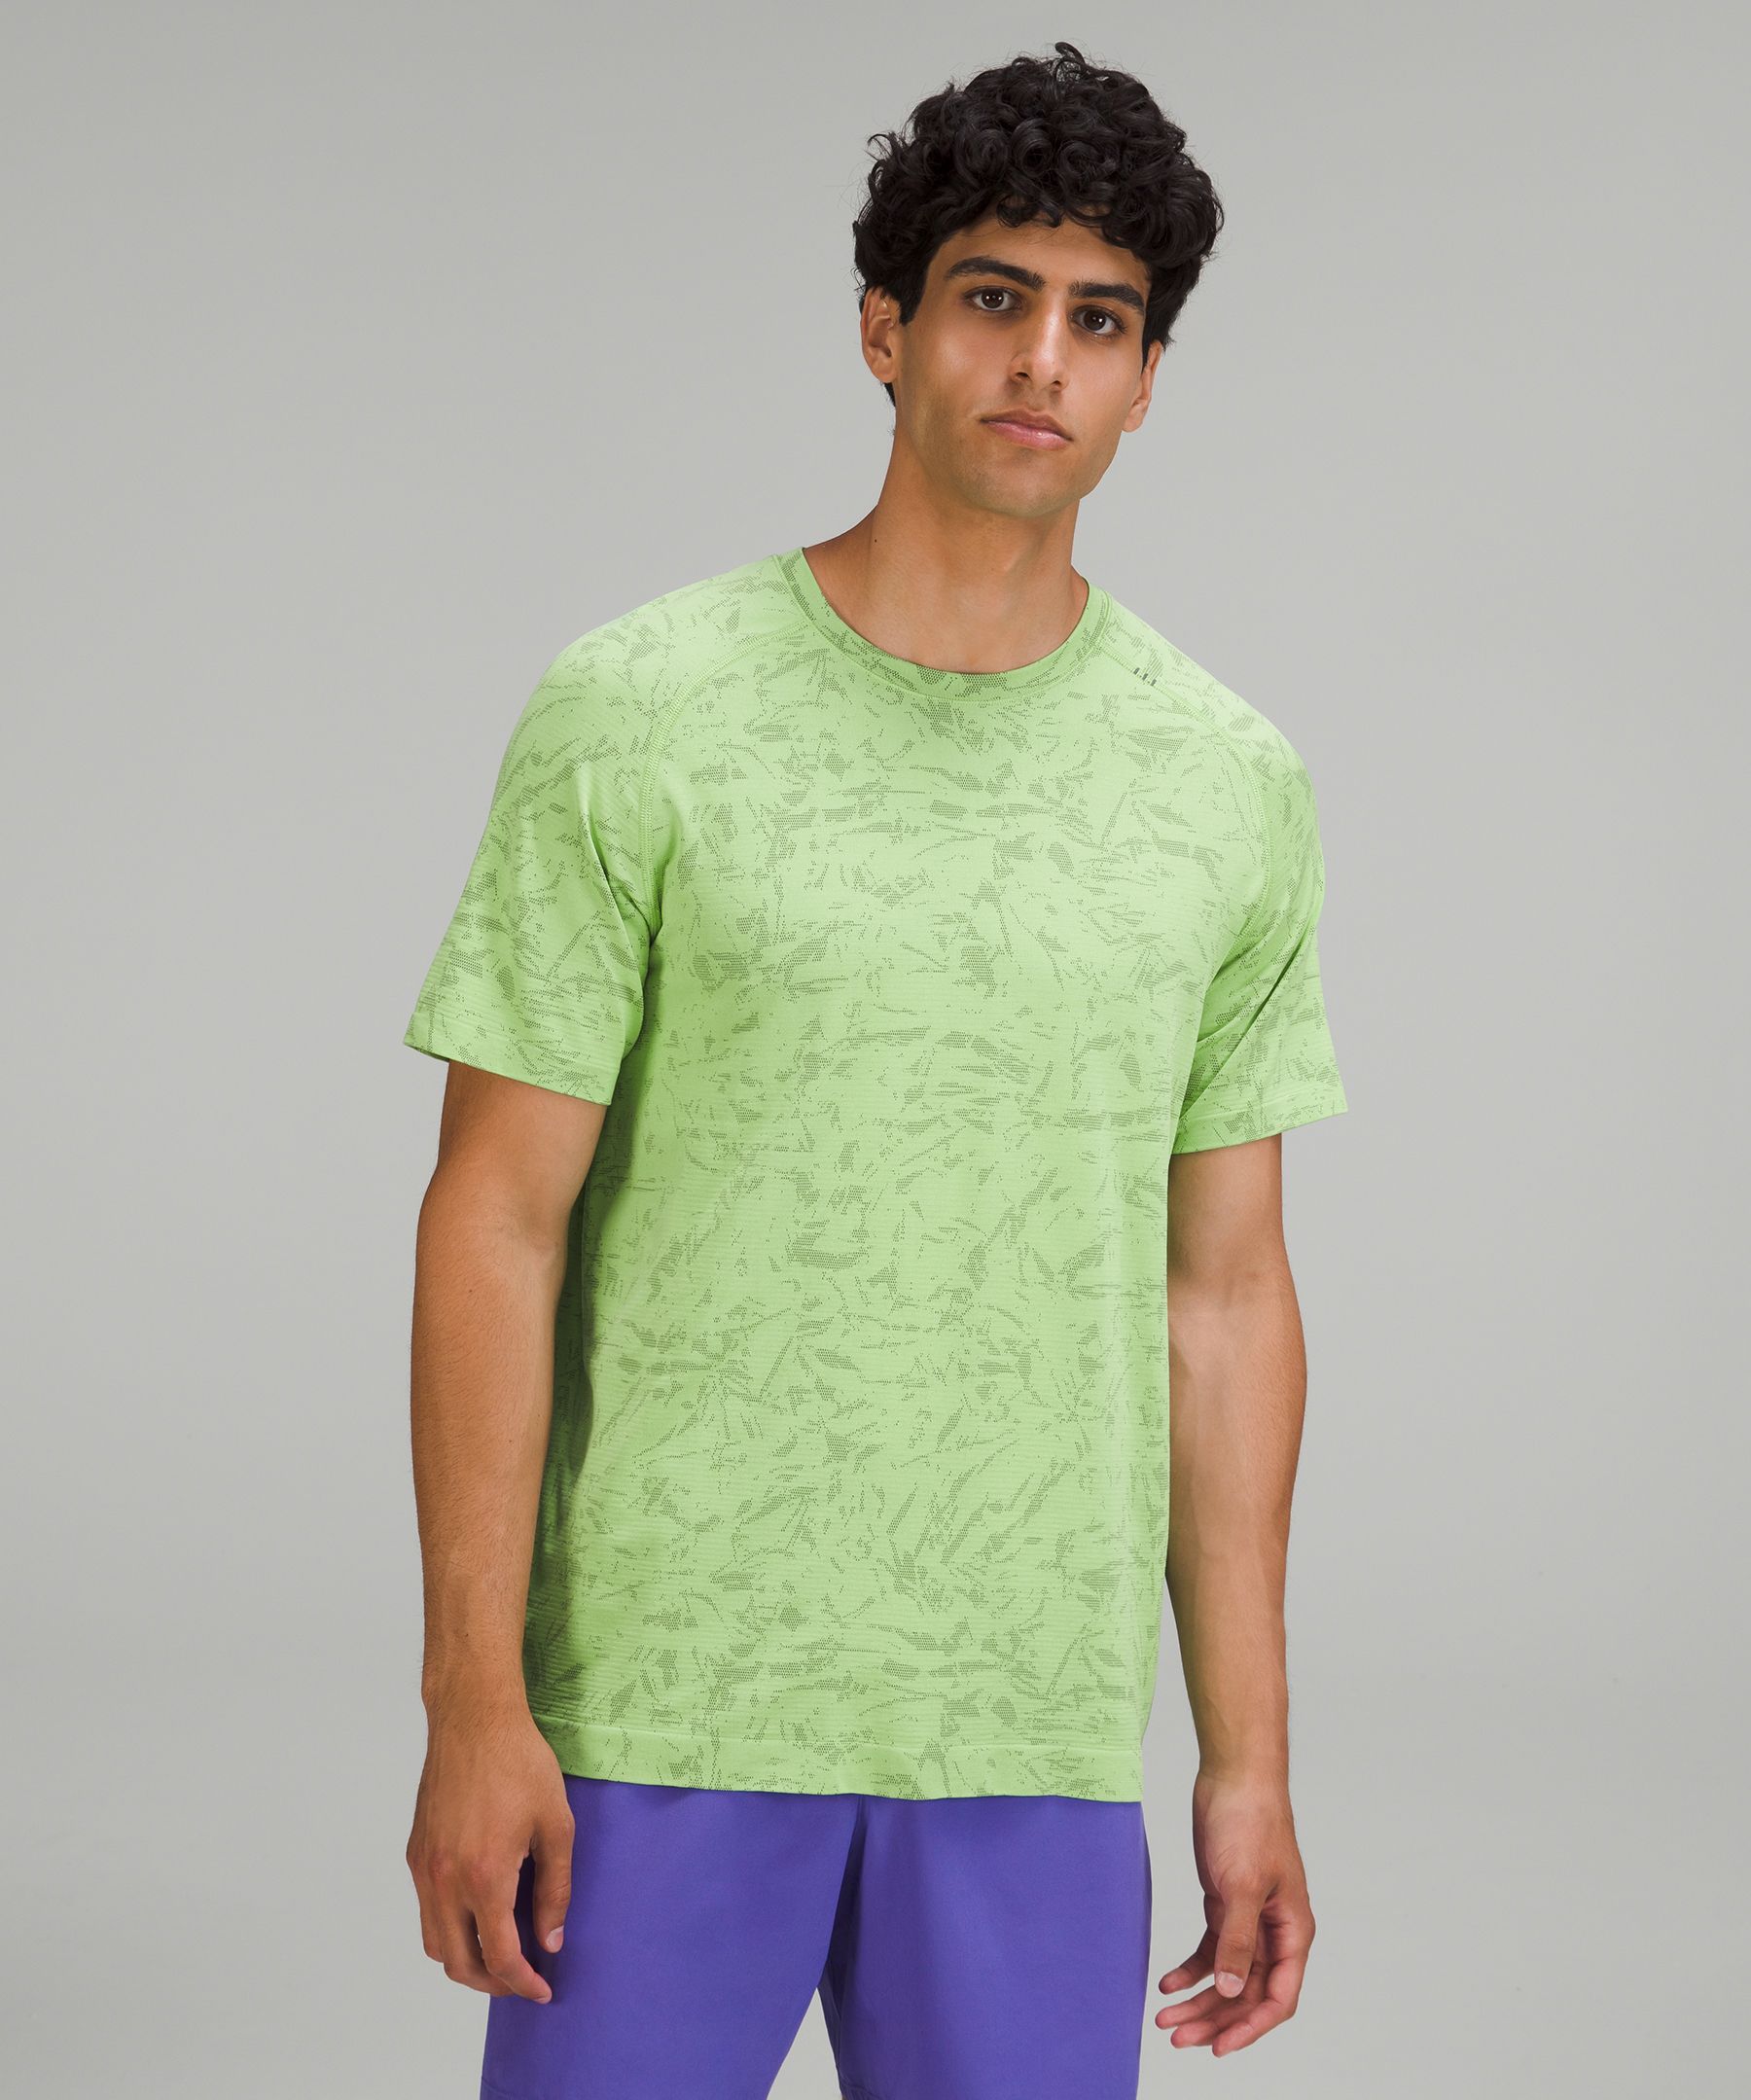 Lululemon Metal Vent Tech Short Sleeve Shirt 2.0 In Block Floral Graphite Grey/scream Green Light